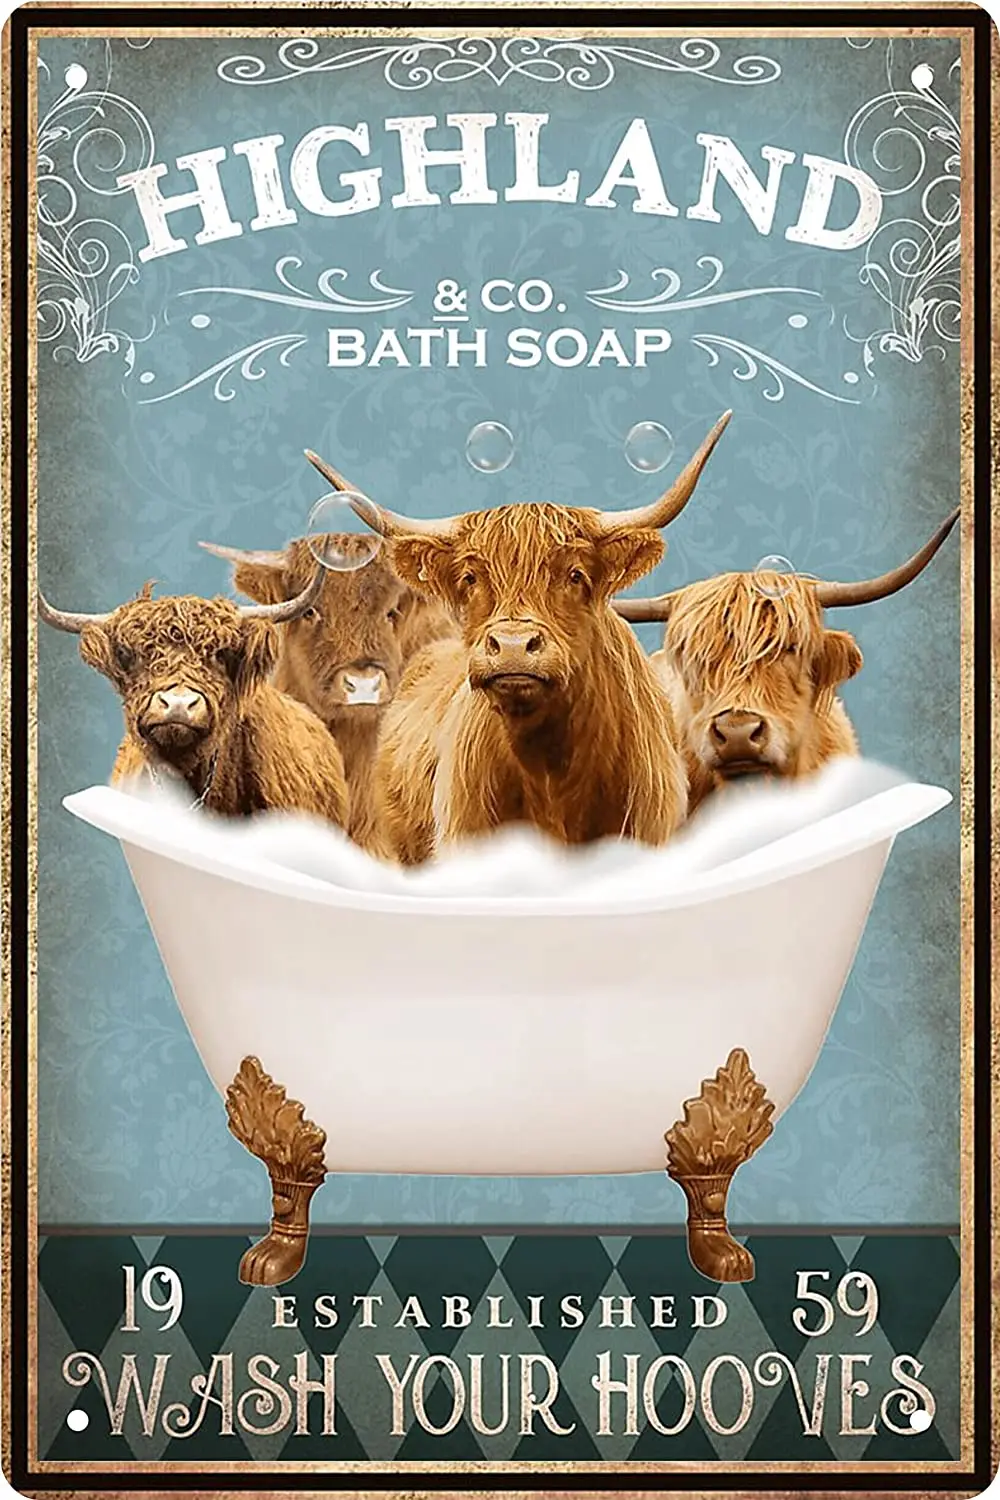 

Funny Highland Cow Decor Vintage Bathroom and Bathtub Metal Tin Sign Decor Bathroom Retro Wall Art Poster Sign Accessories